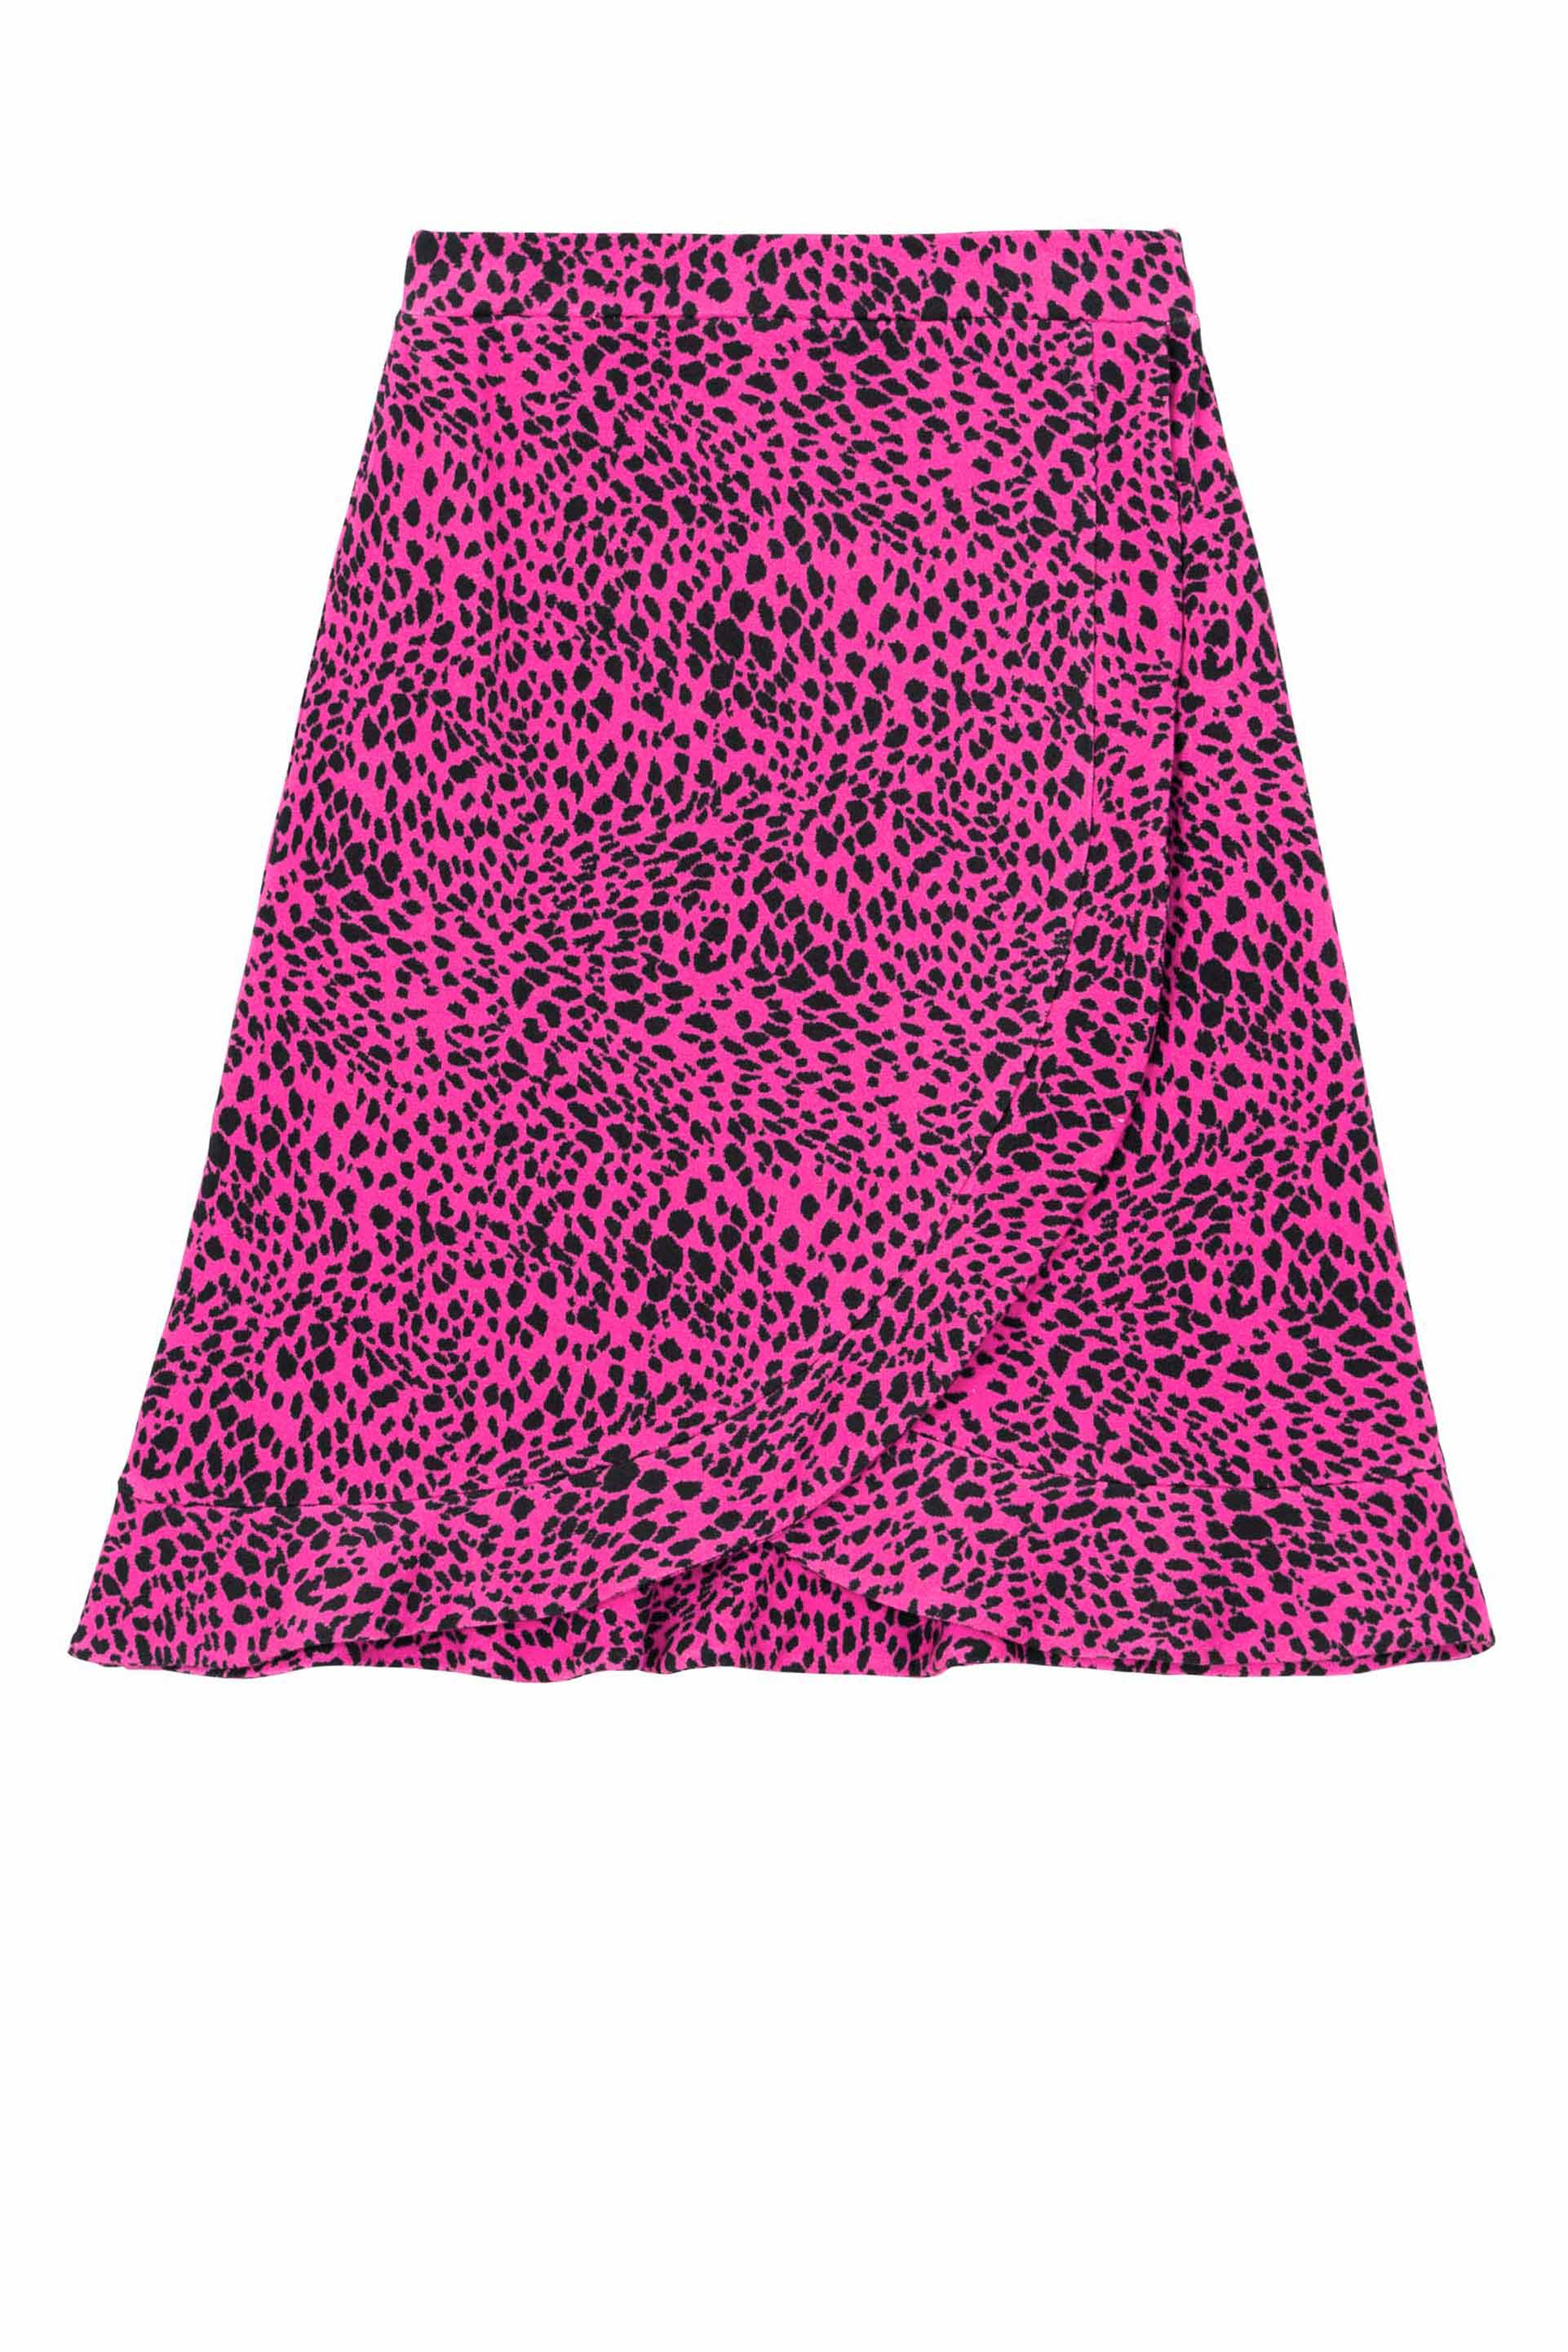 52235_millie_skirt_hot_pink_leopard.jpg